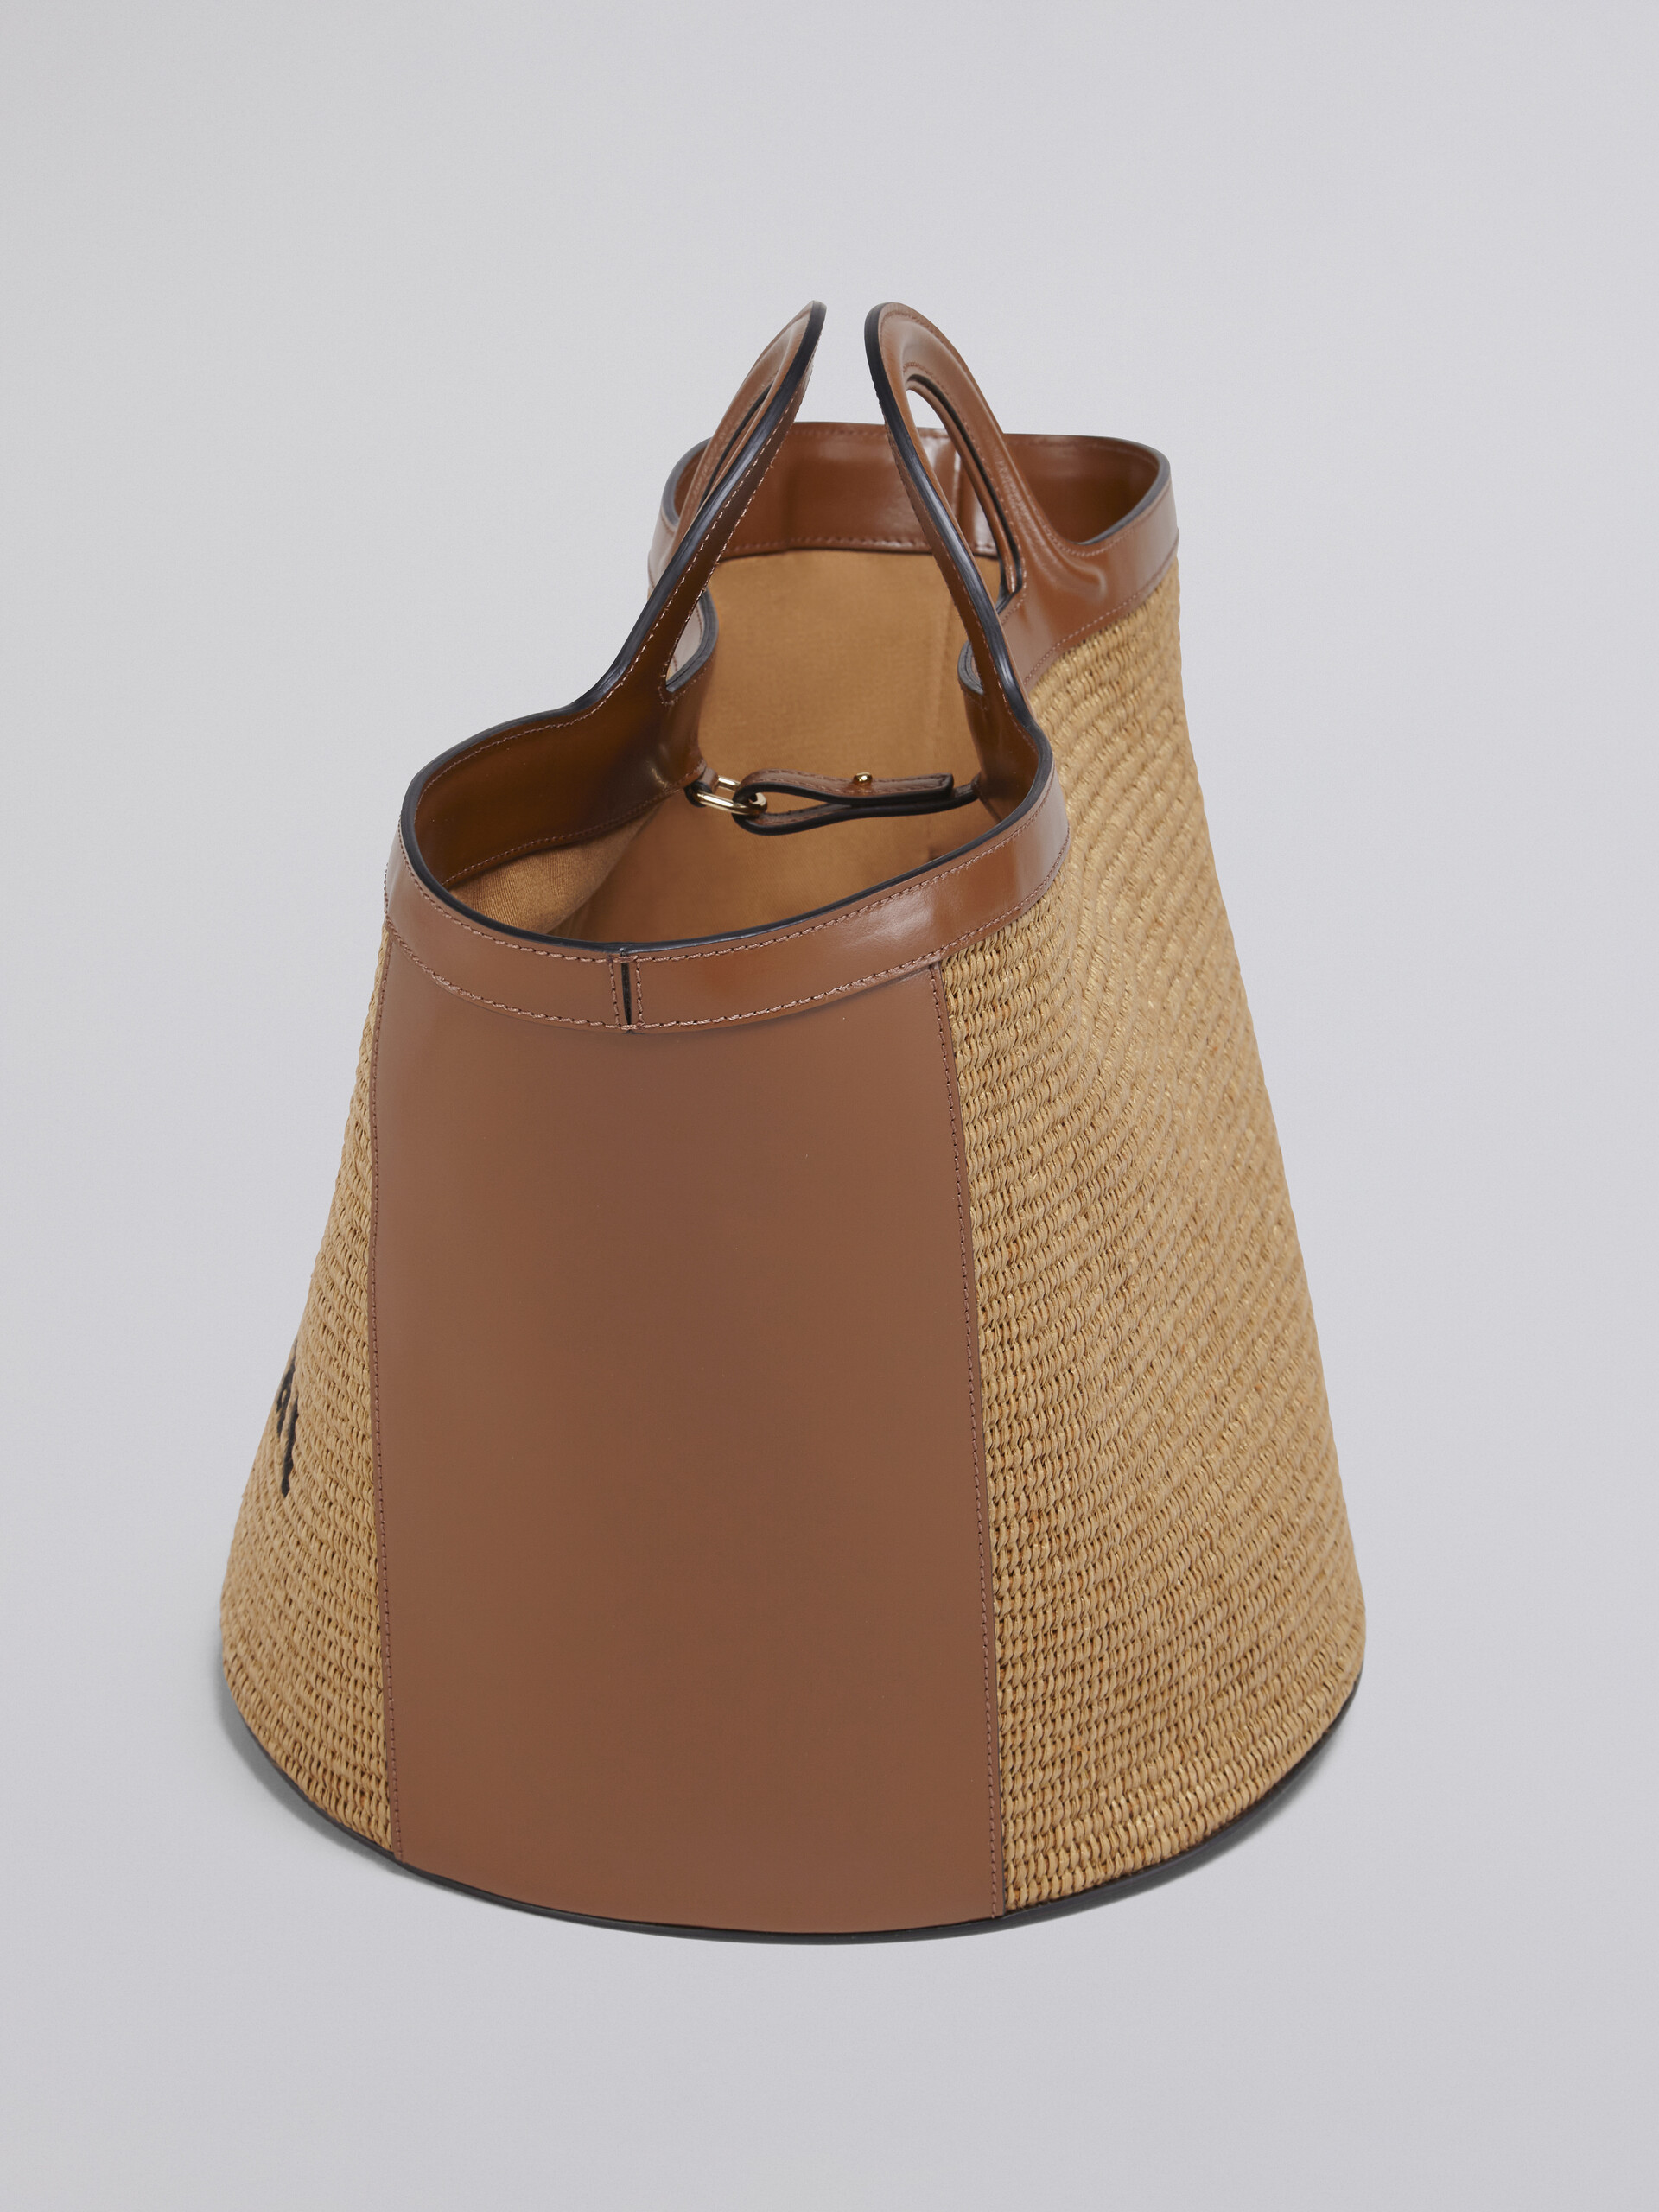 TROPICALIA large bag in brown leather and raffia - Handbag - Image 5